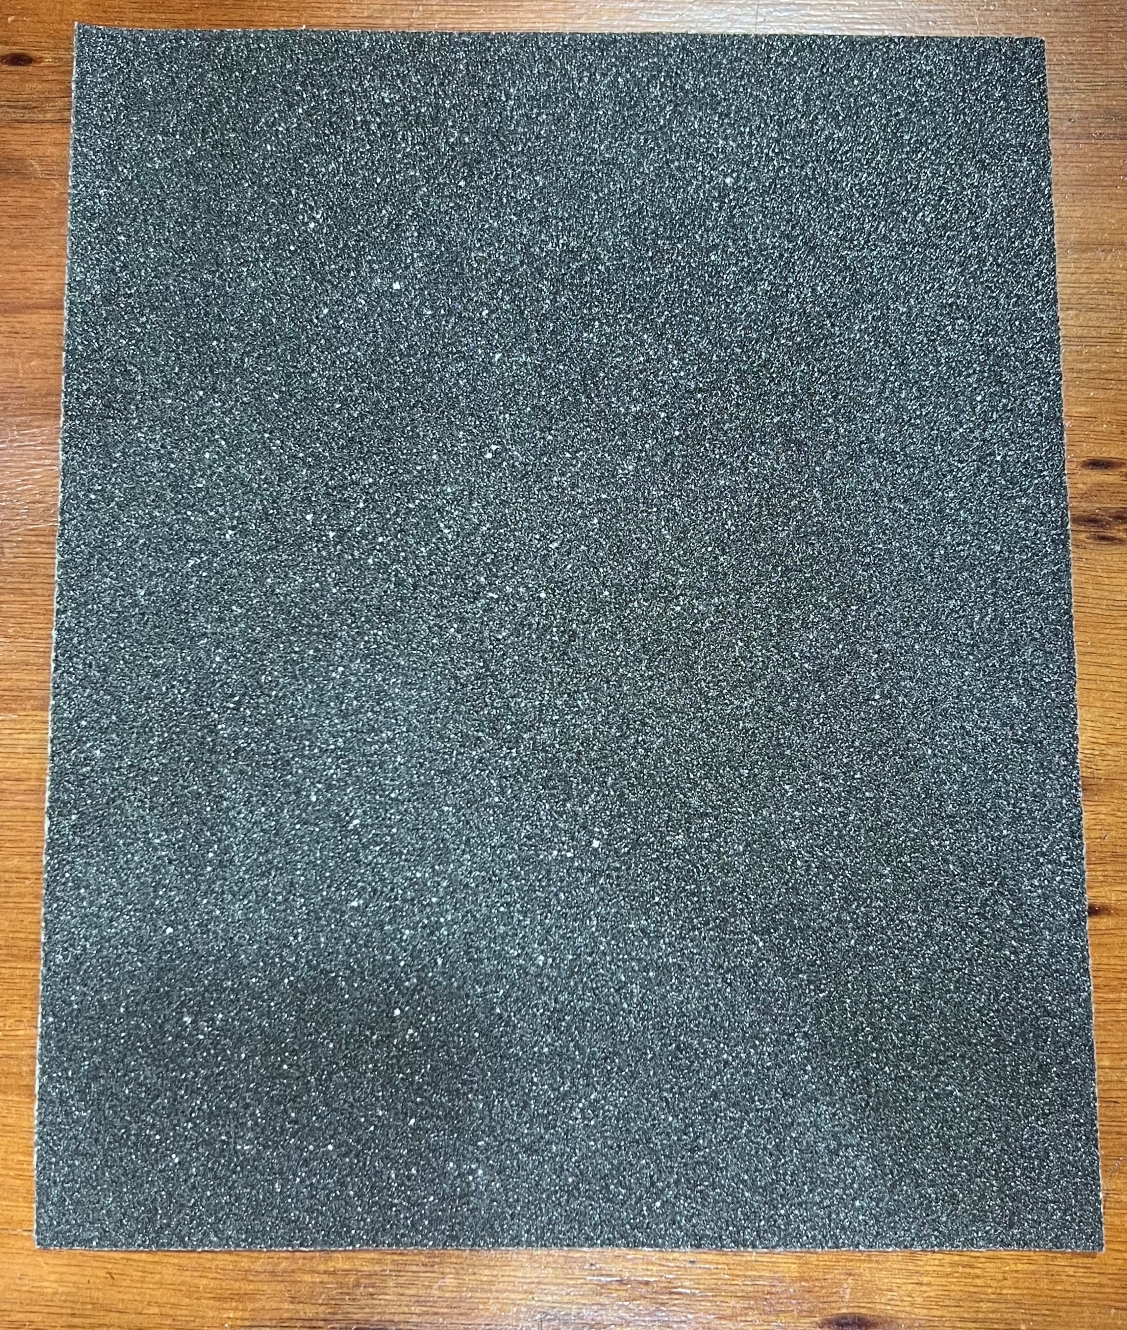 SANDPAPER Aluminium Oxide Waterproof Abrasive Paper NO80 280x230mm